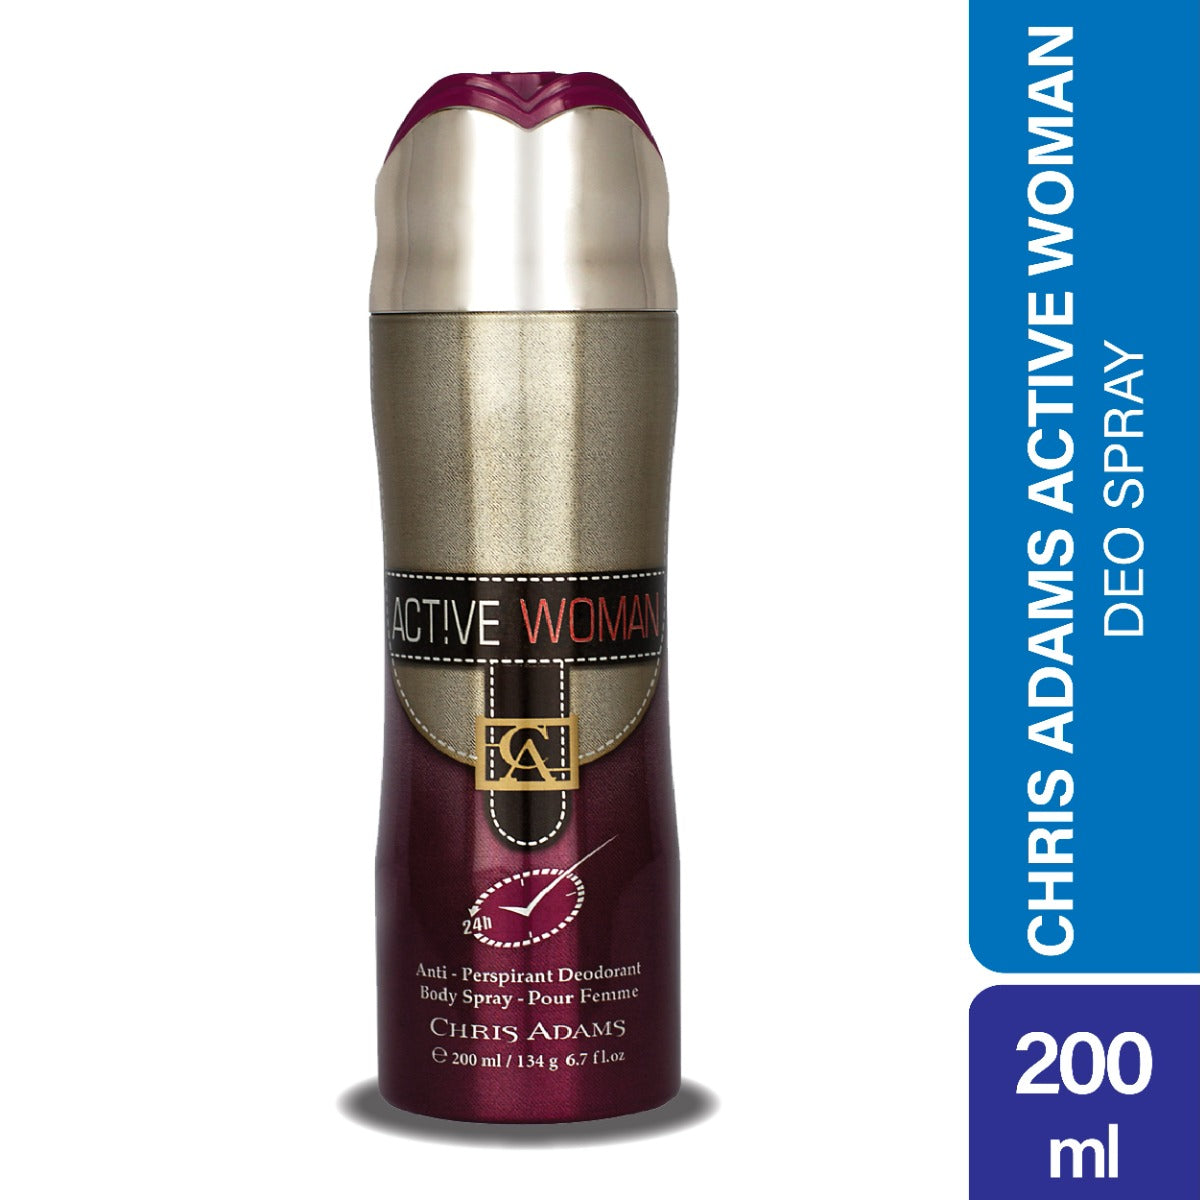 Chris Adams Deodorant Body Spray Active Woman (200ml)